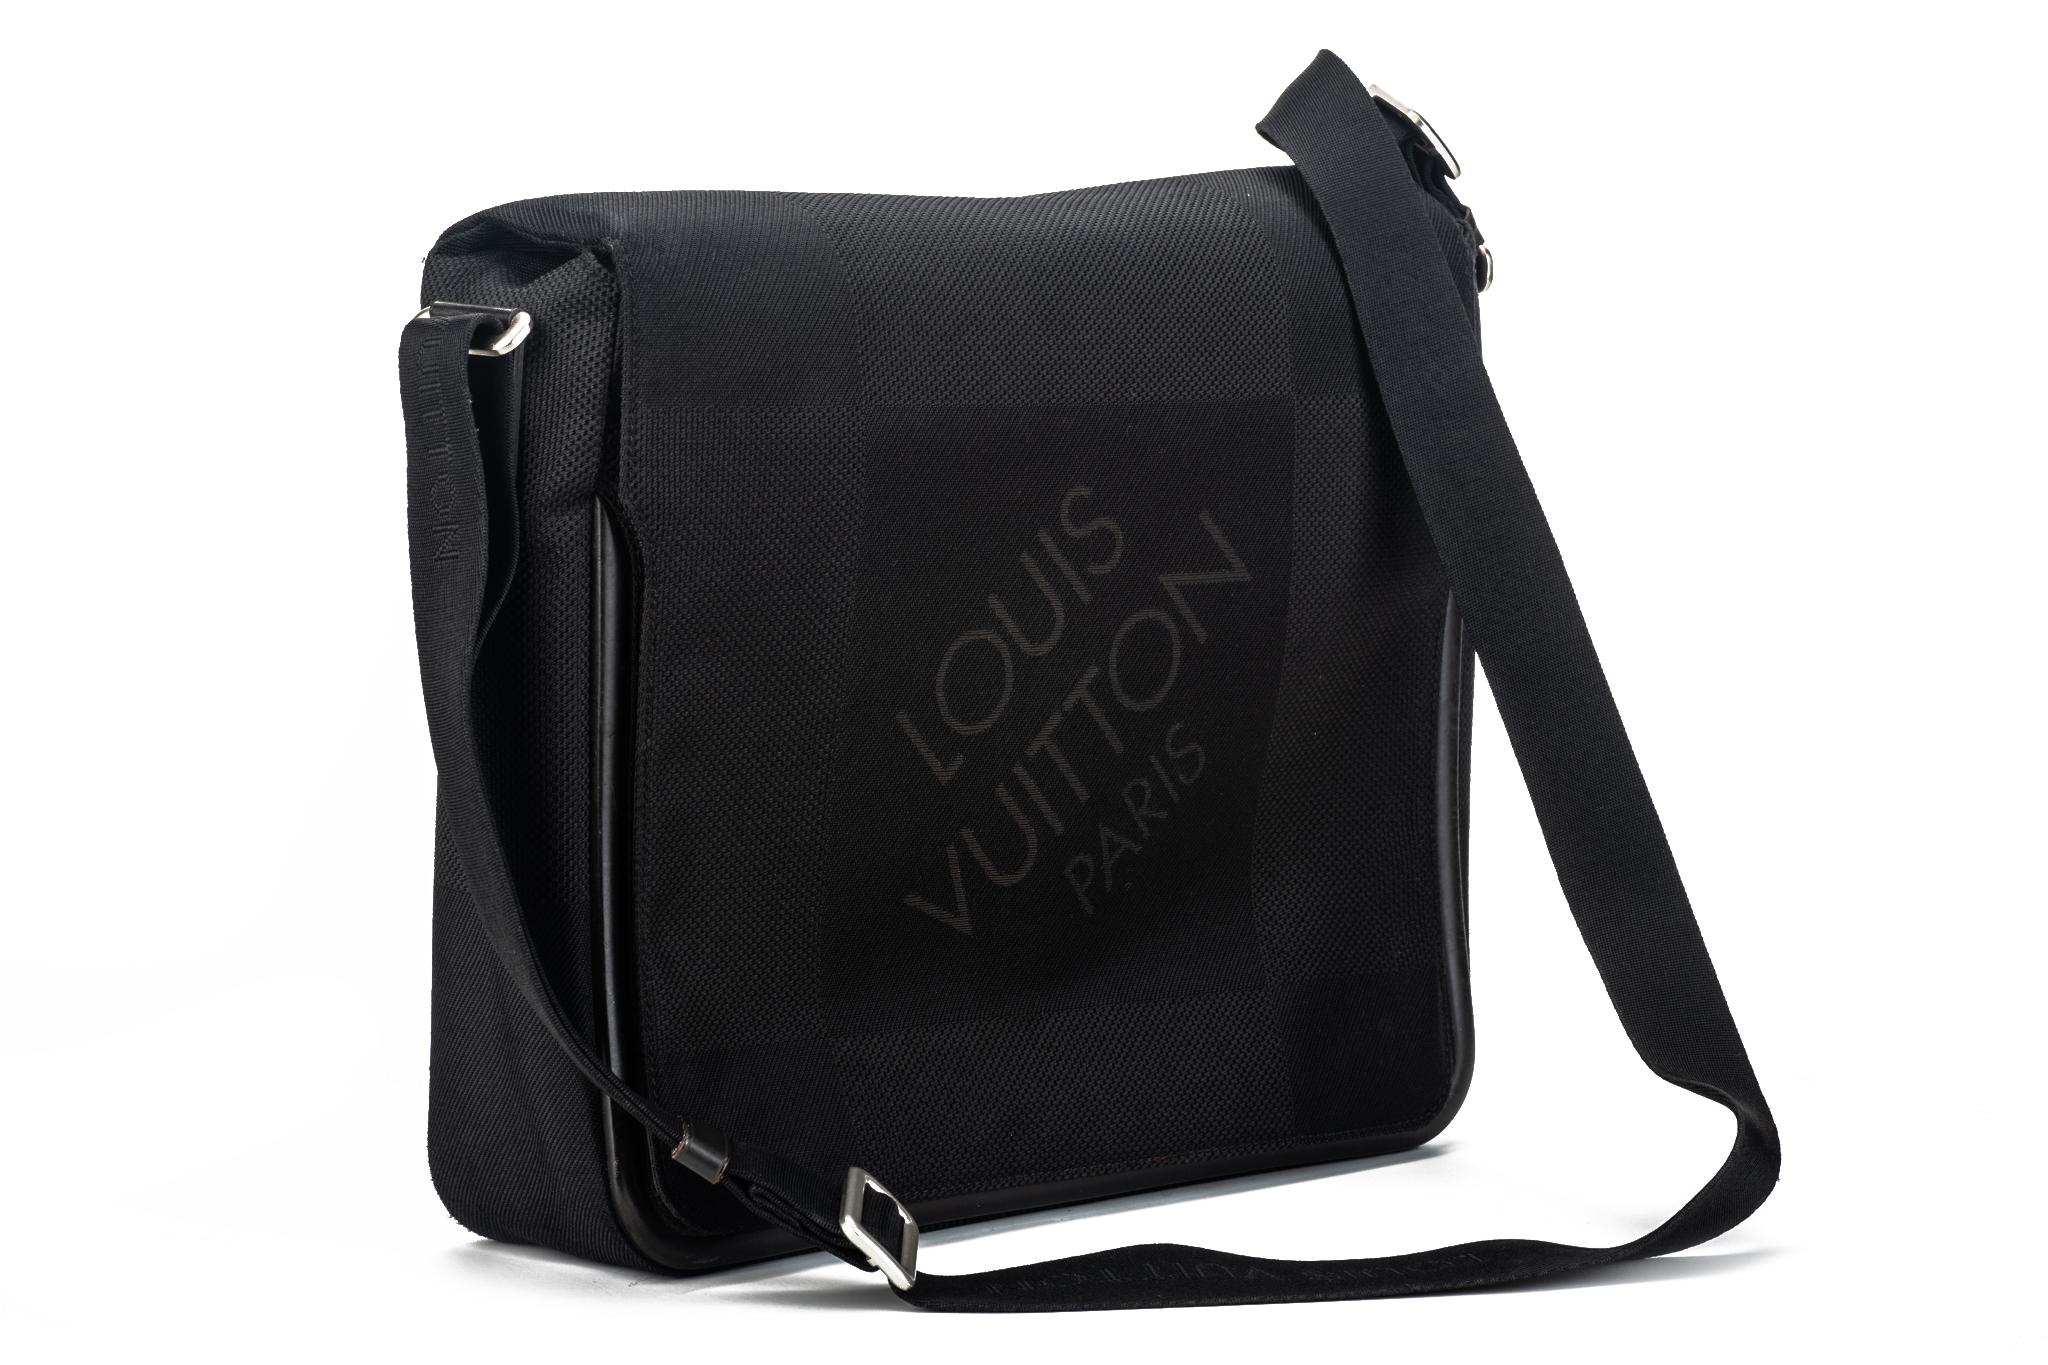 Louis Vuitton excellent condition gentleman s computer bag, shoulder or cross body. Interior dividers for laptop or ipad. Shoulder drop 19